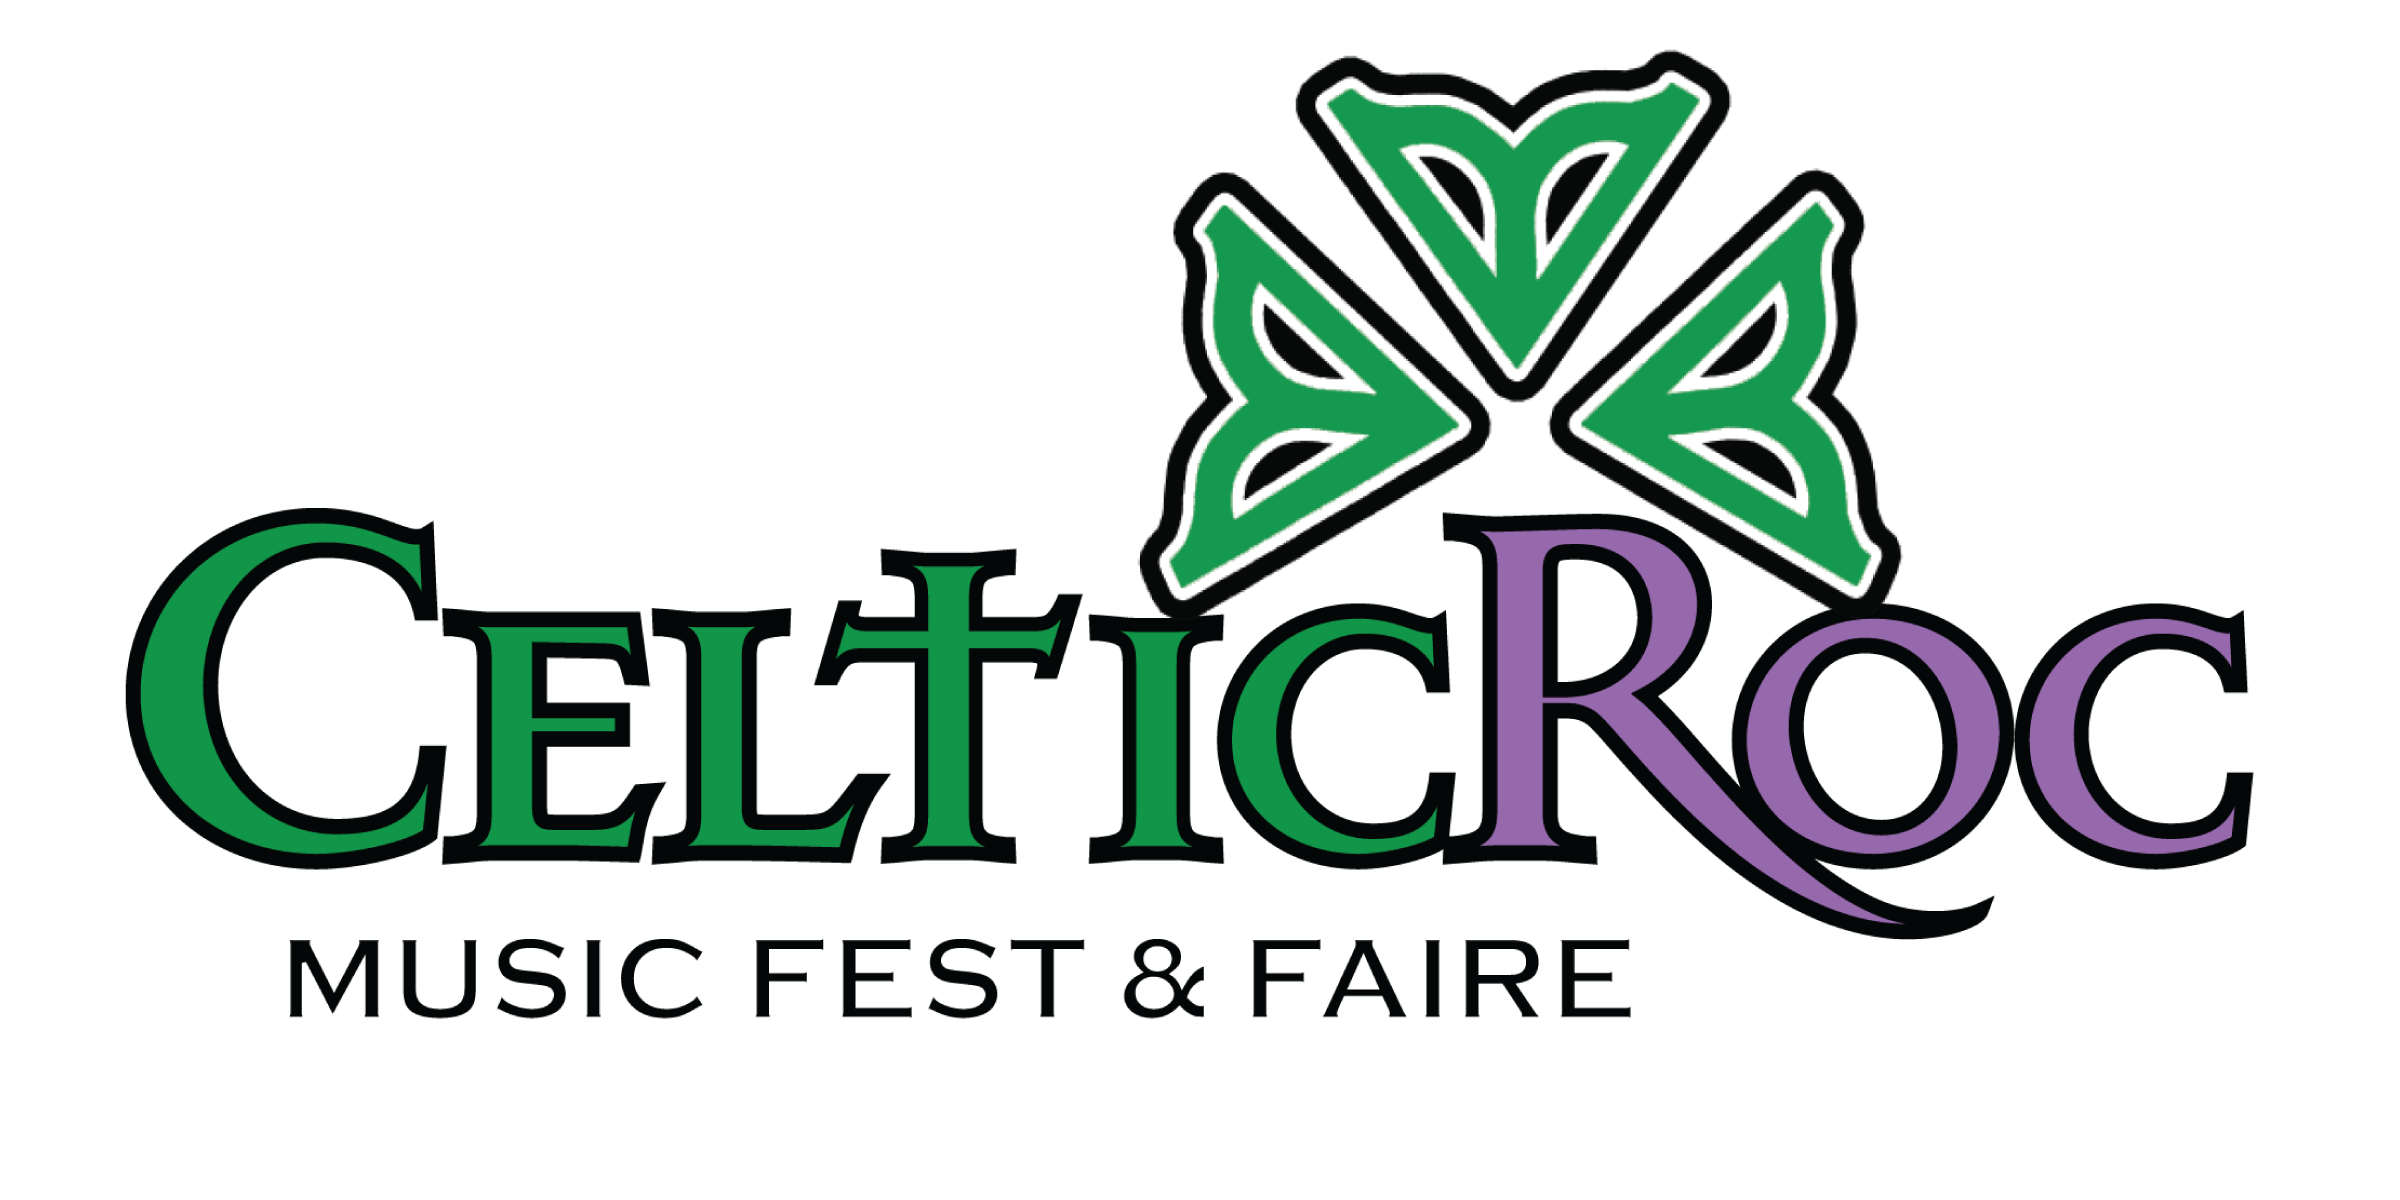 Celtic ROC music festival July 27 2019